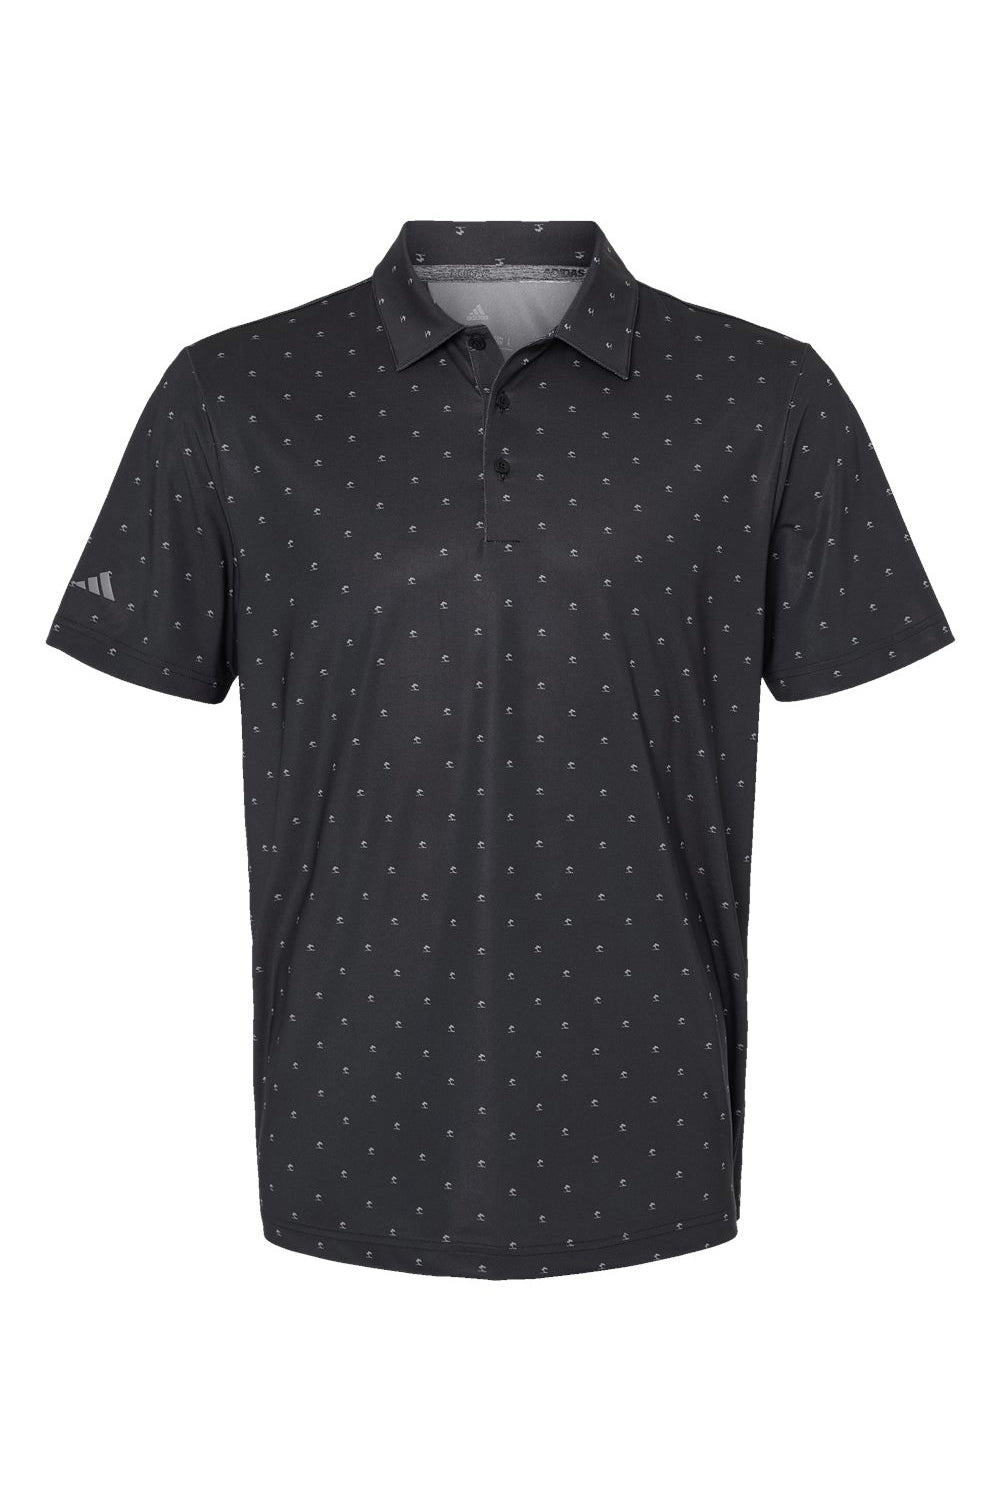 Adidas A574 Mens Pine Tree Short Sleeve Polo Shirt Black/Grey Flat Front